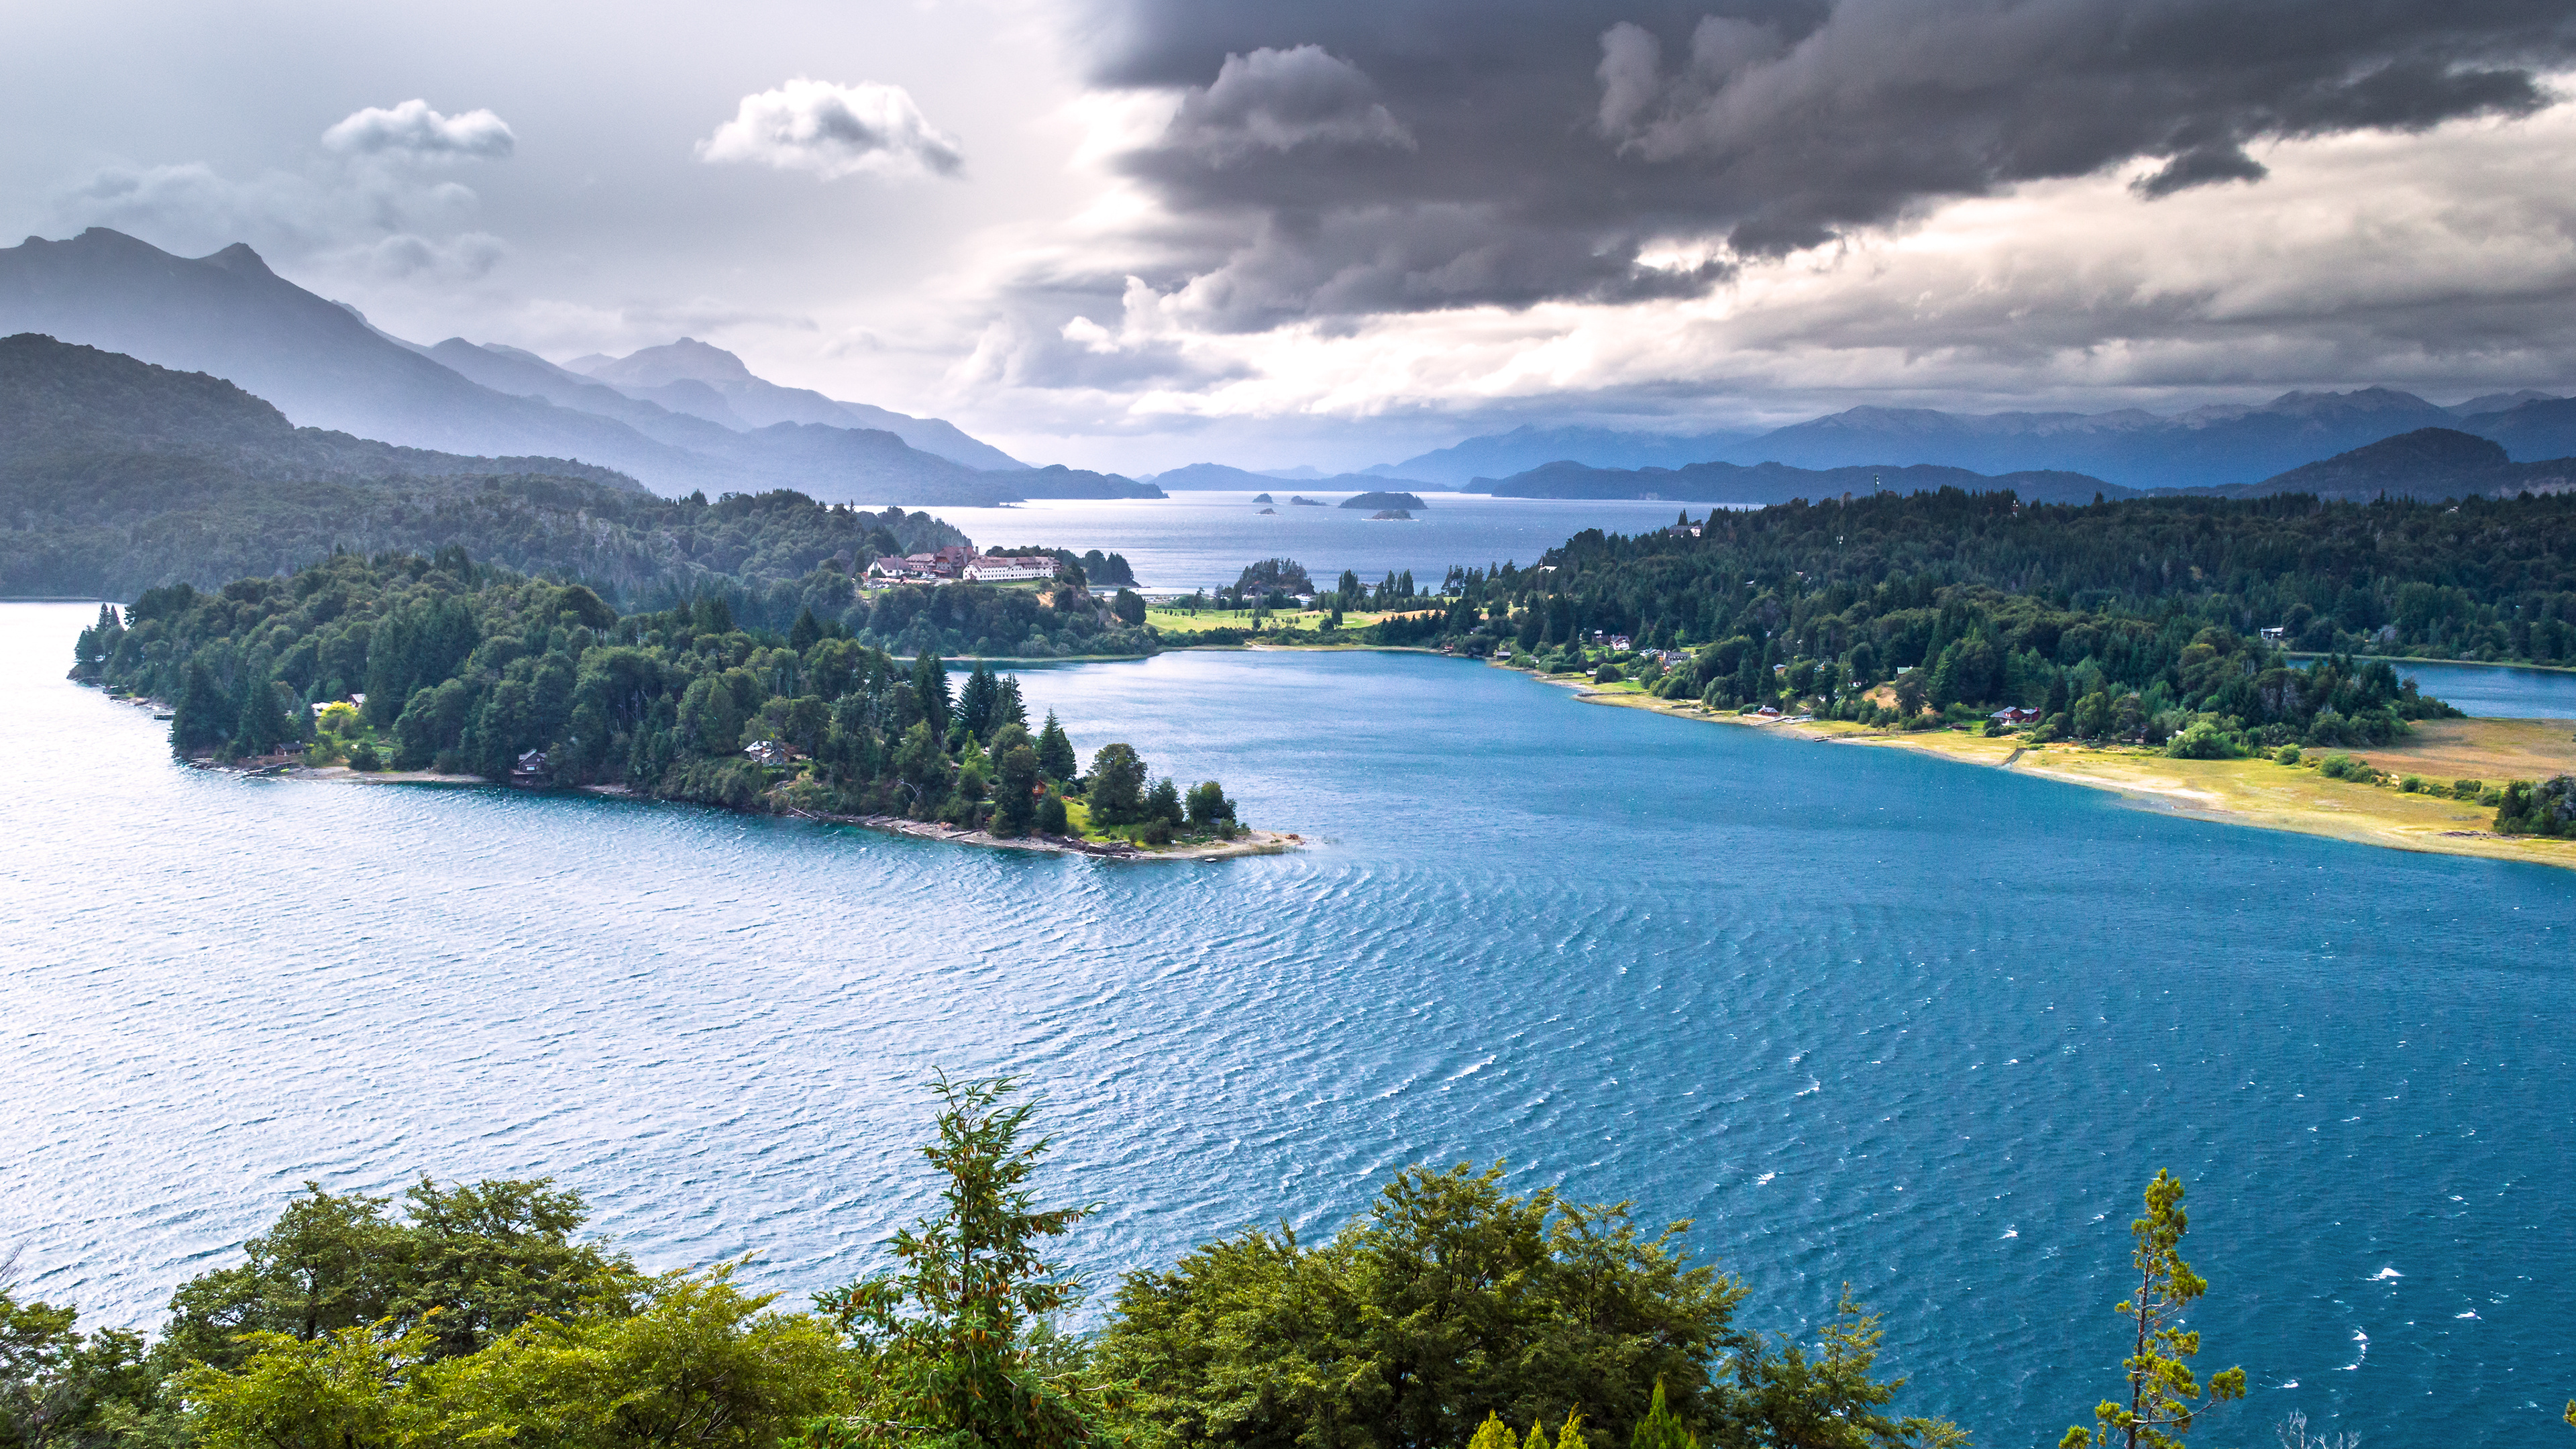 Nahuel Huapi, Breathtaking lake, Argentina's beauty, Nature's masterpiece, 3840x2160 4K Desktop